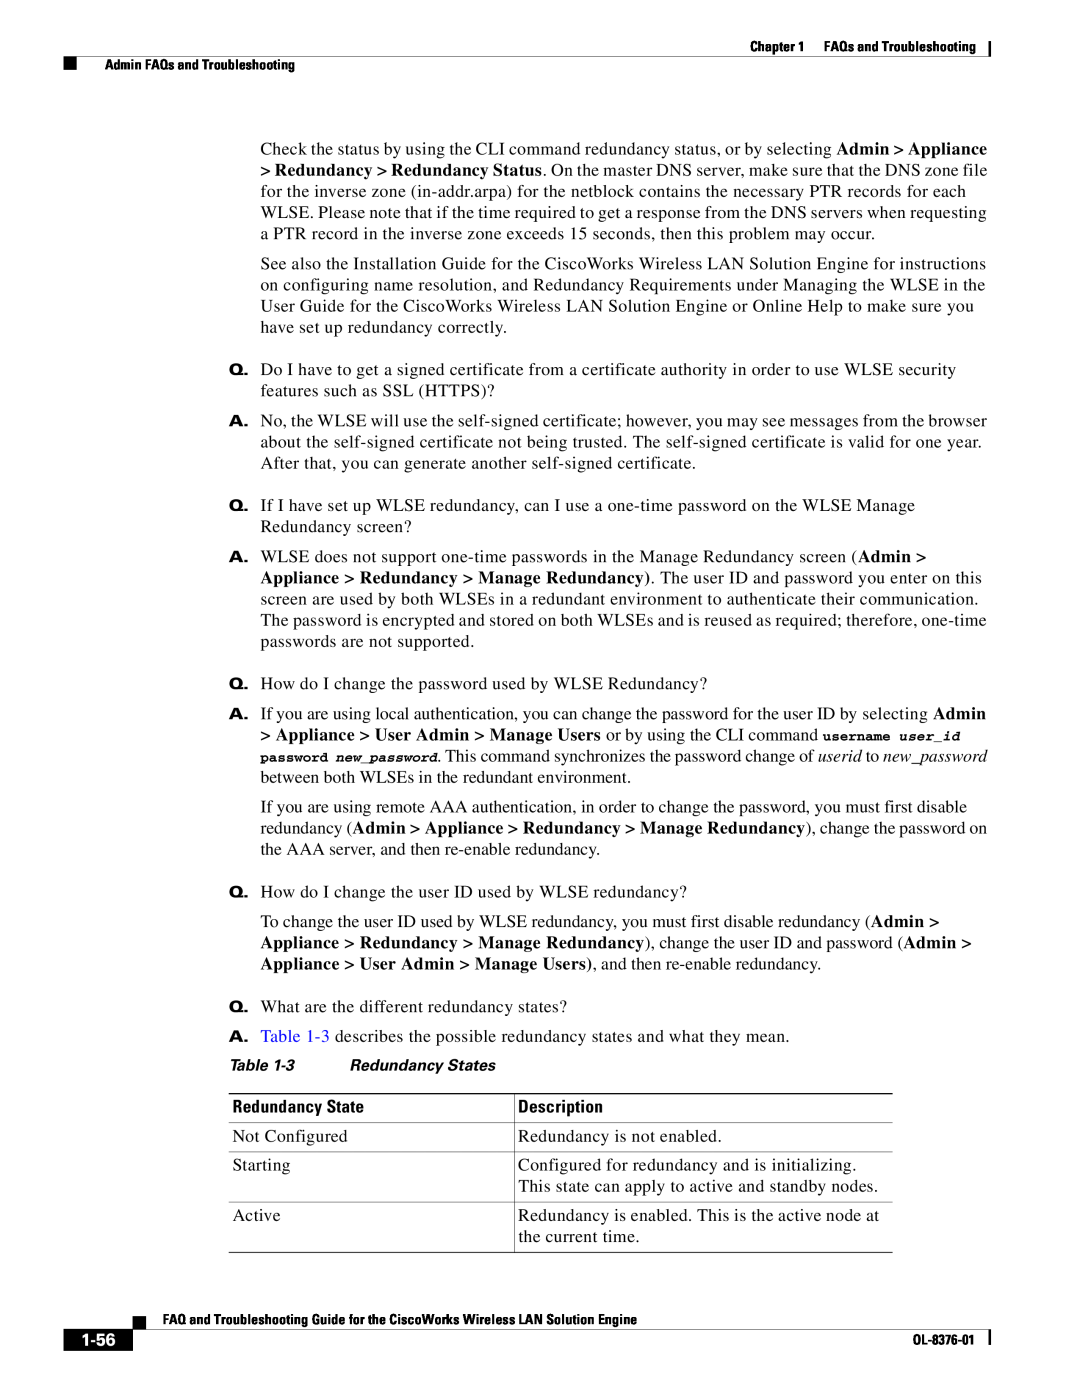 Cisco Systems OL-8376-01 manual Redundancy State, 1-56, Description 